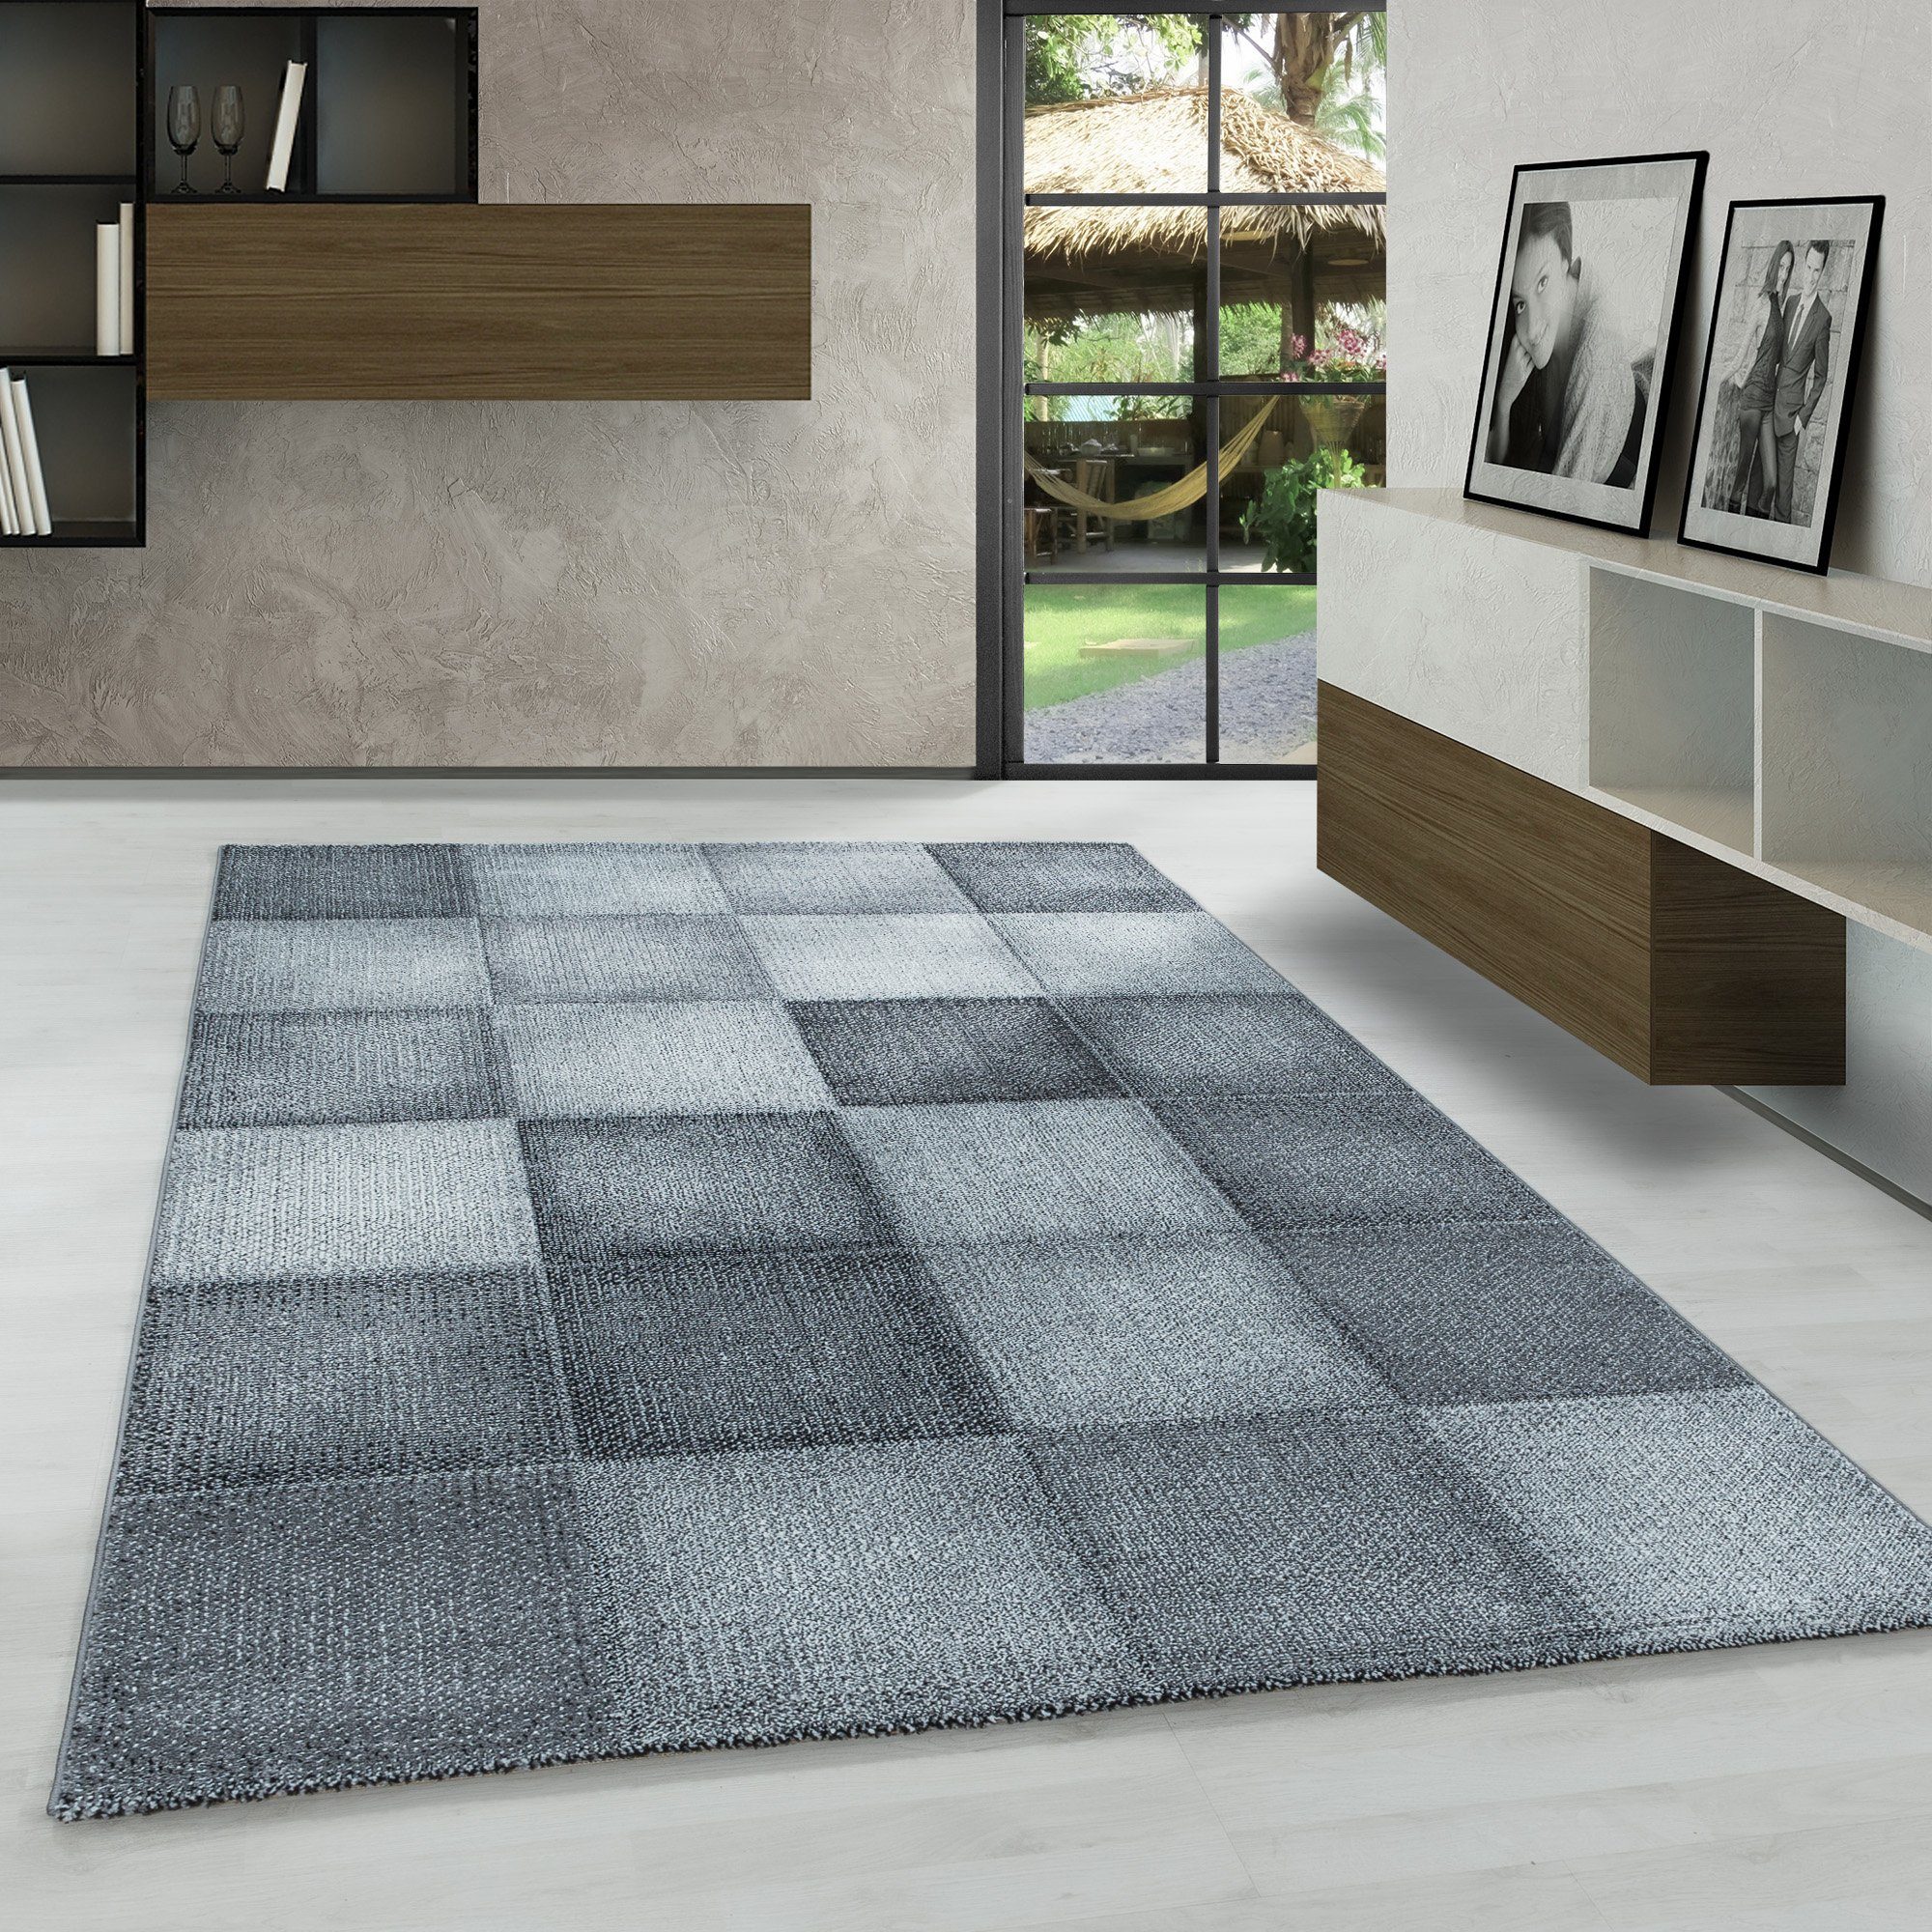 Frisé-Teppich Kariert Modern Höhe: 8 mm, größen Carpetsale24, Läufer, Design, Kariert verschidene Kurzflor Wohnzimmer Design Teppich